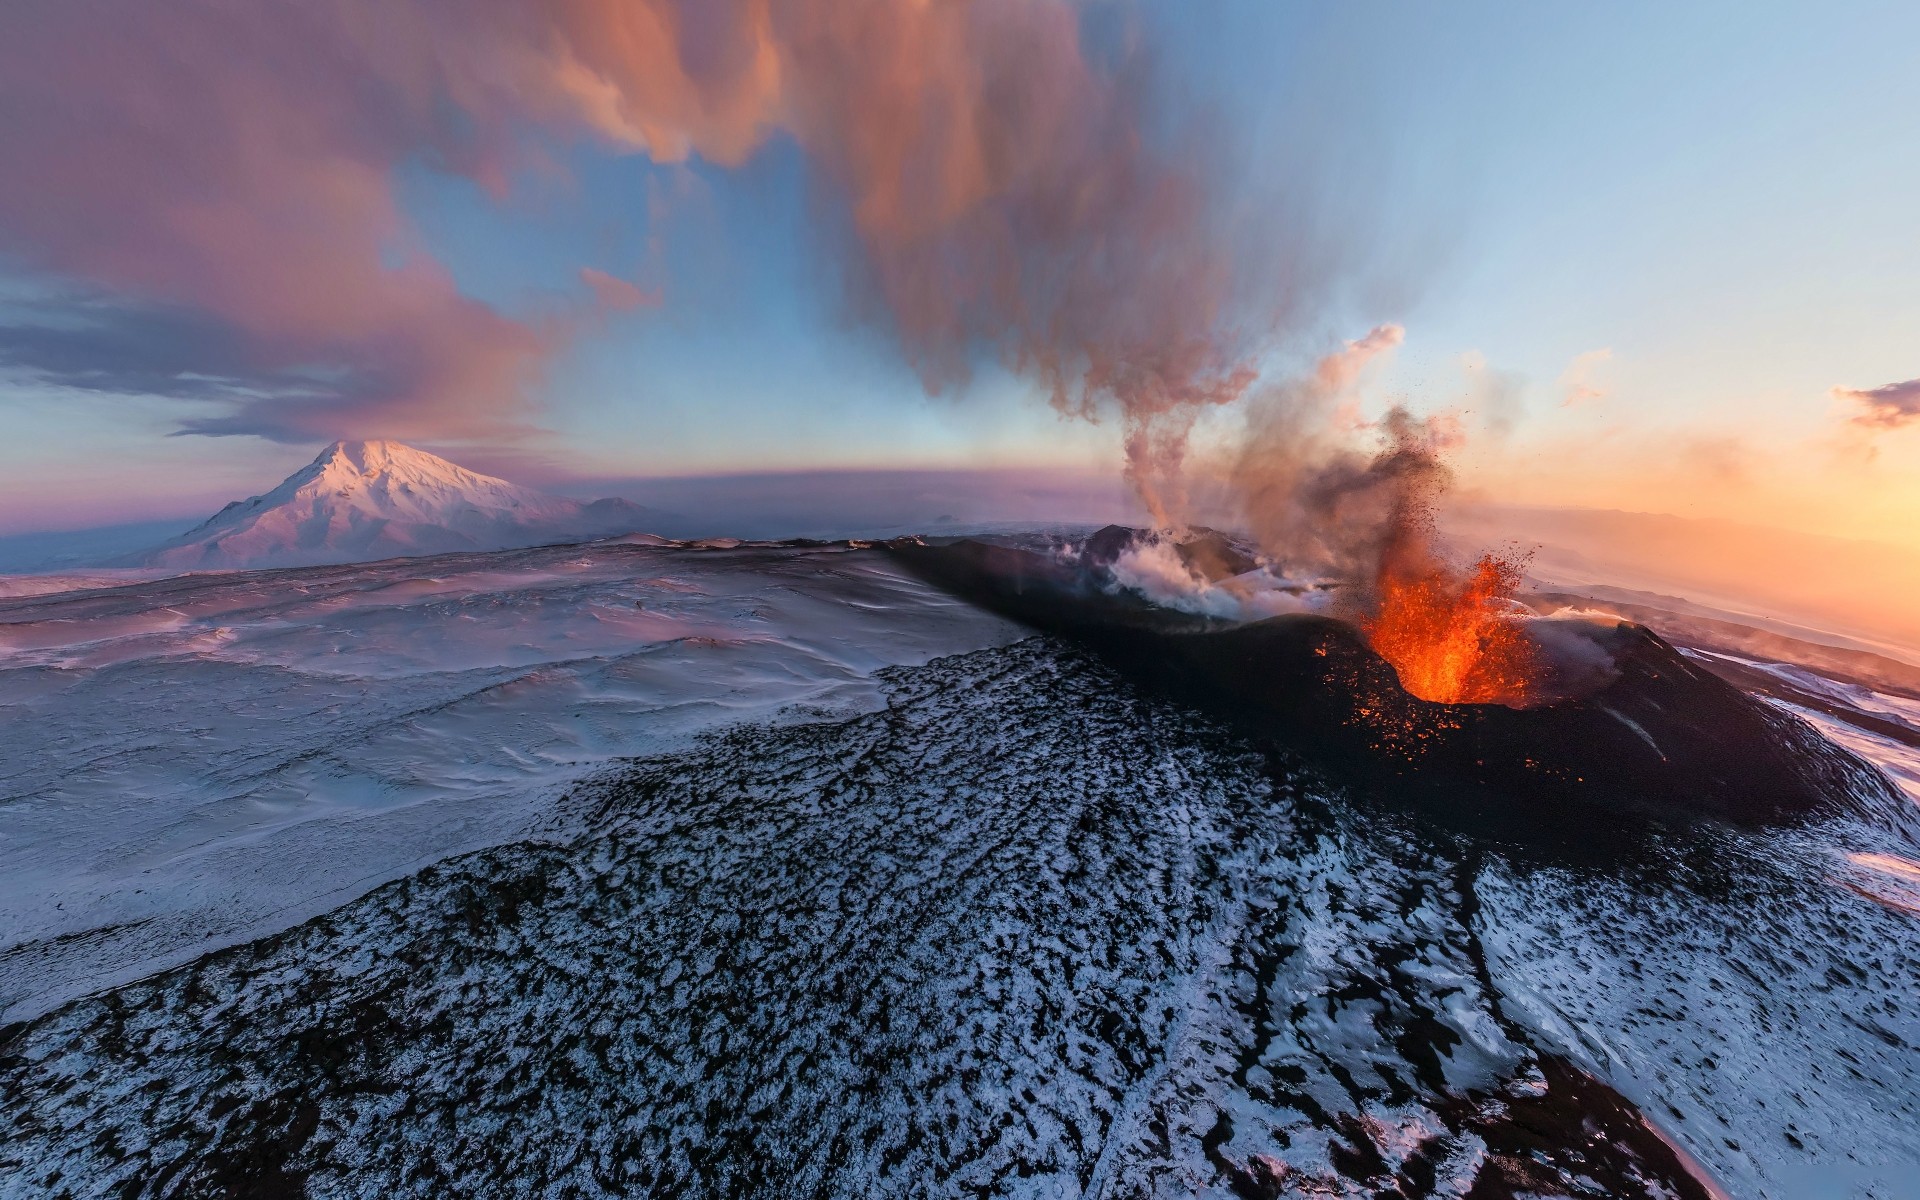 russia volcano sunset snow eruption landscape dawn water mountain outdoors winter evening fog sky steam smoke fire